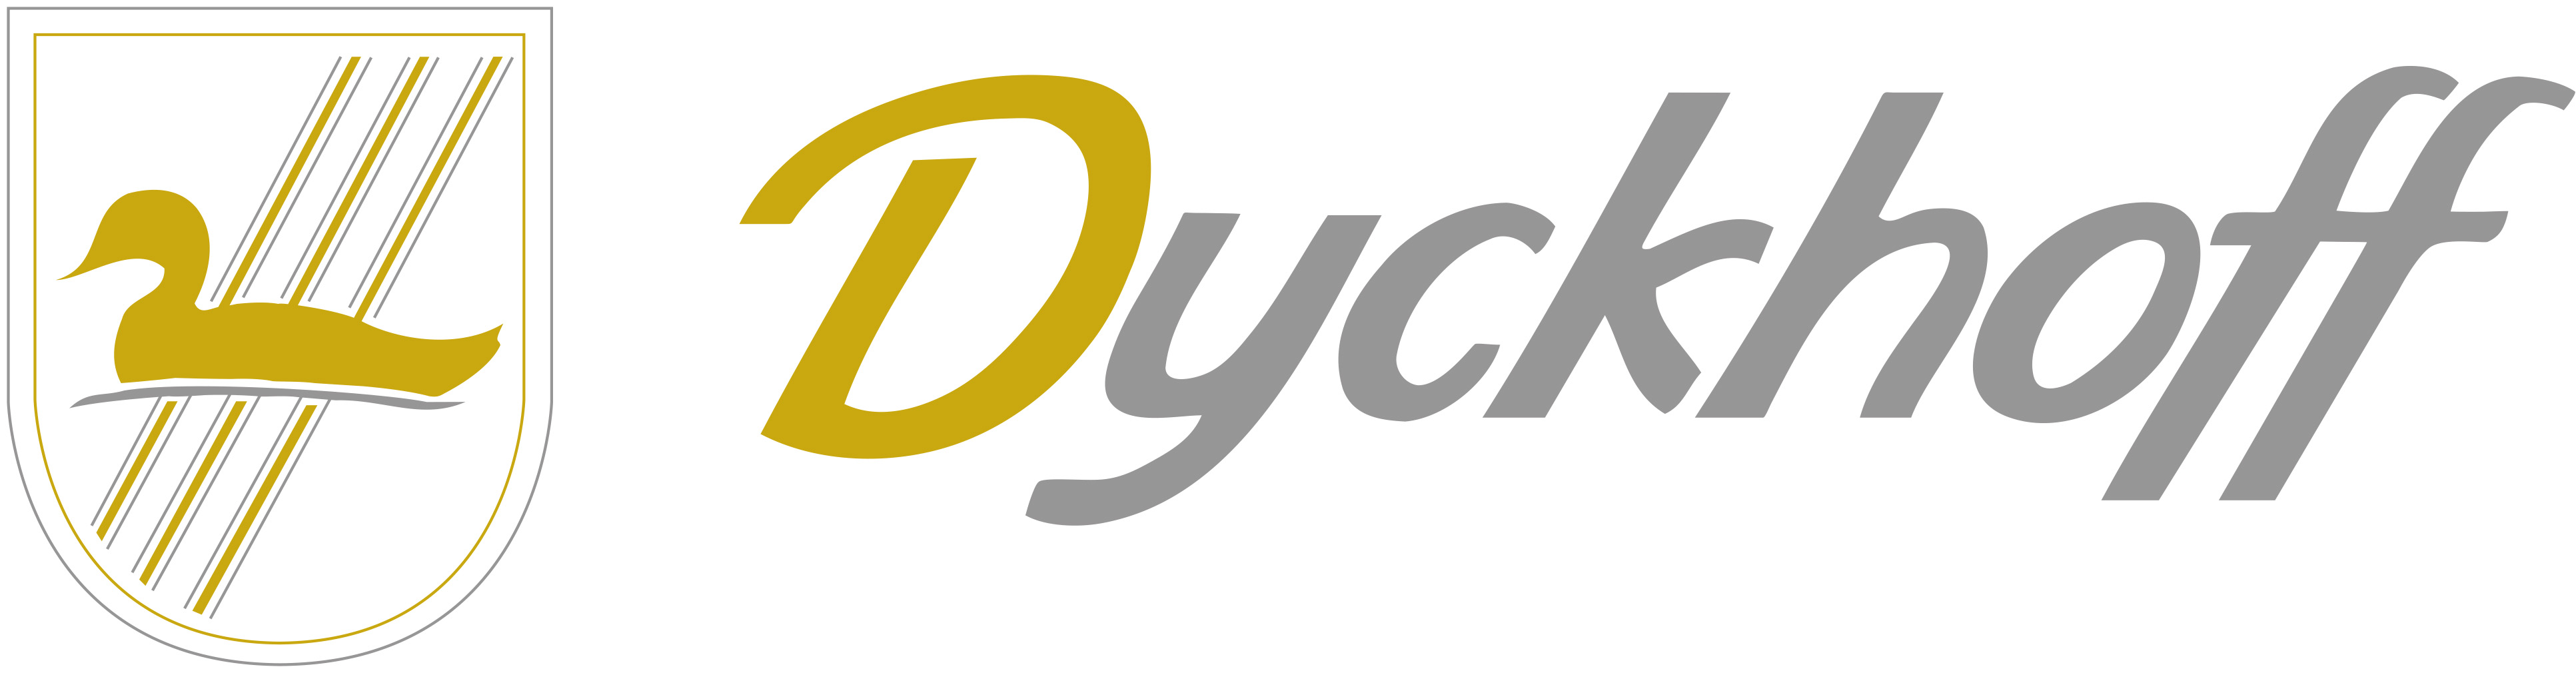 (c) Dyckhoff24.de